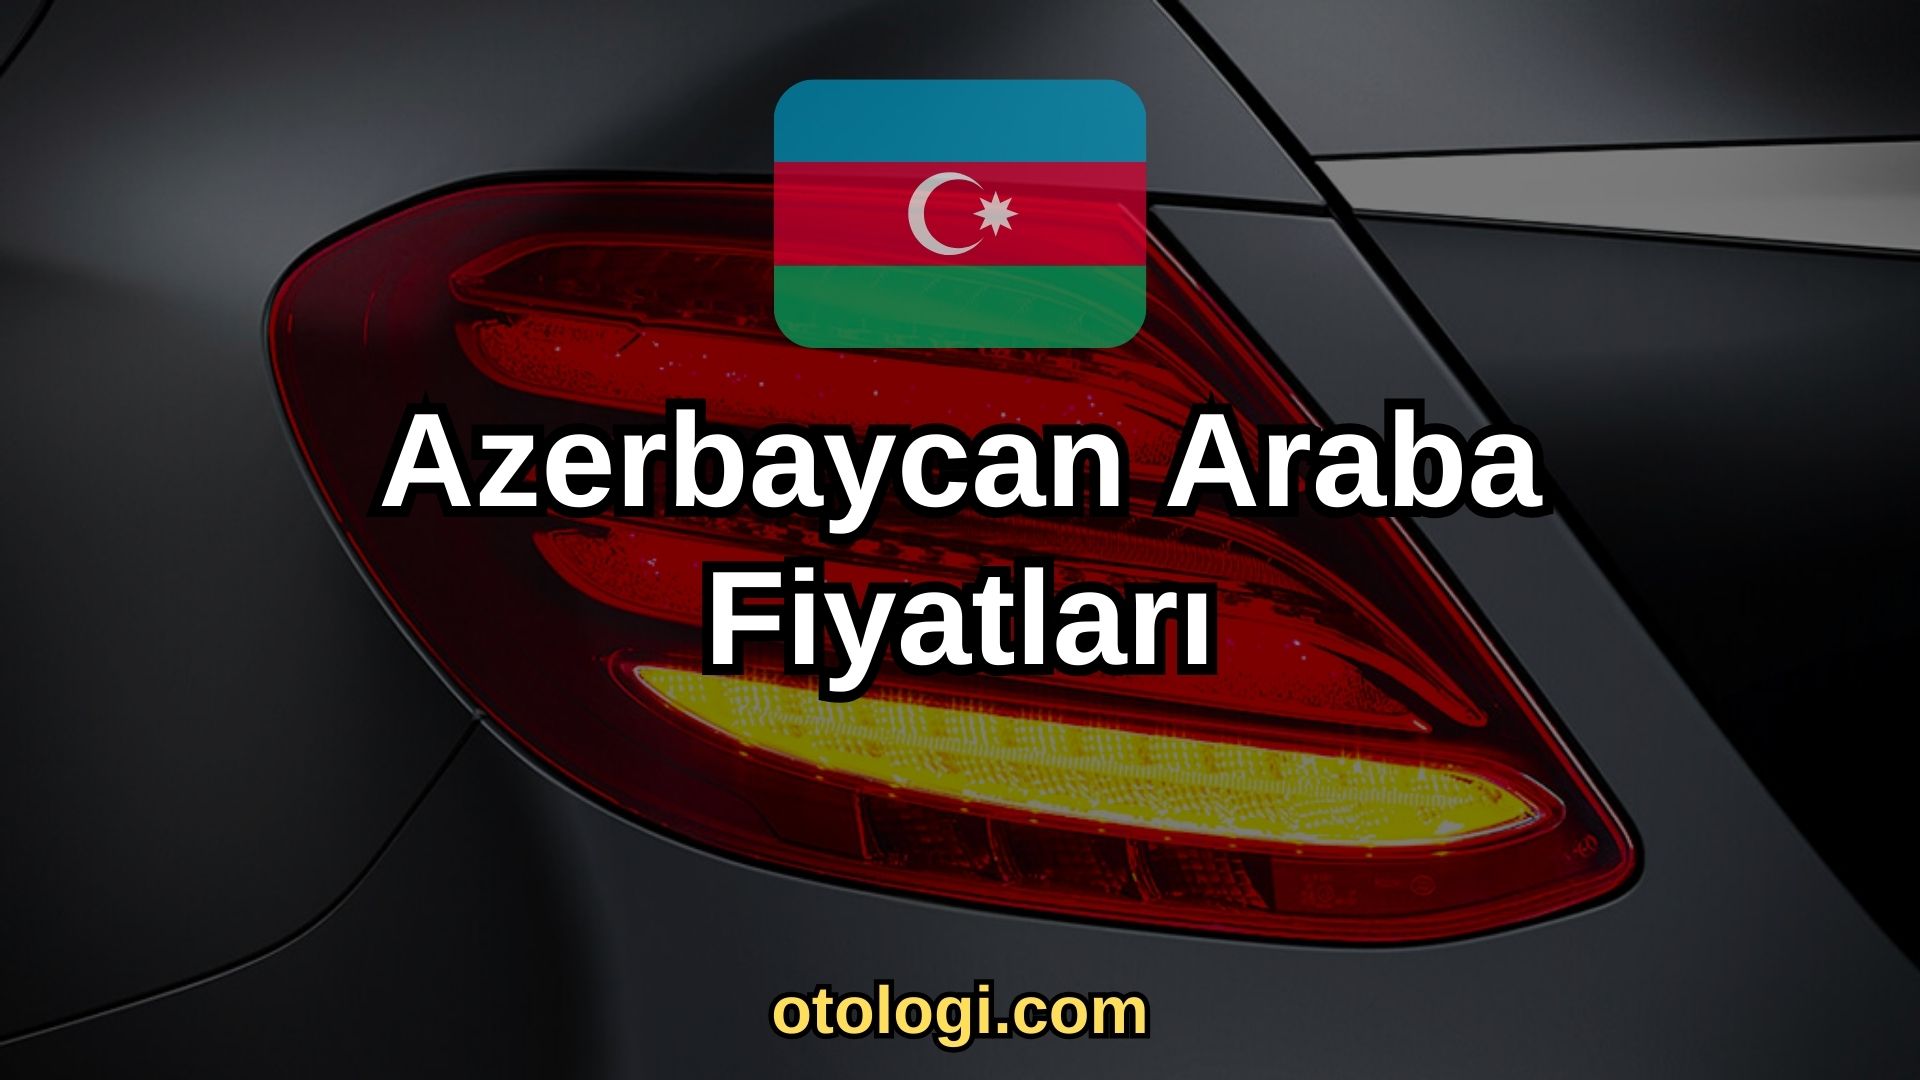 Azerbaycan Araba Fiyatları